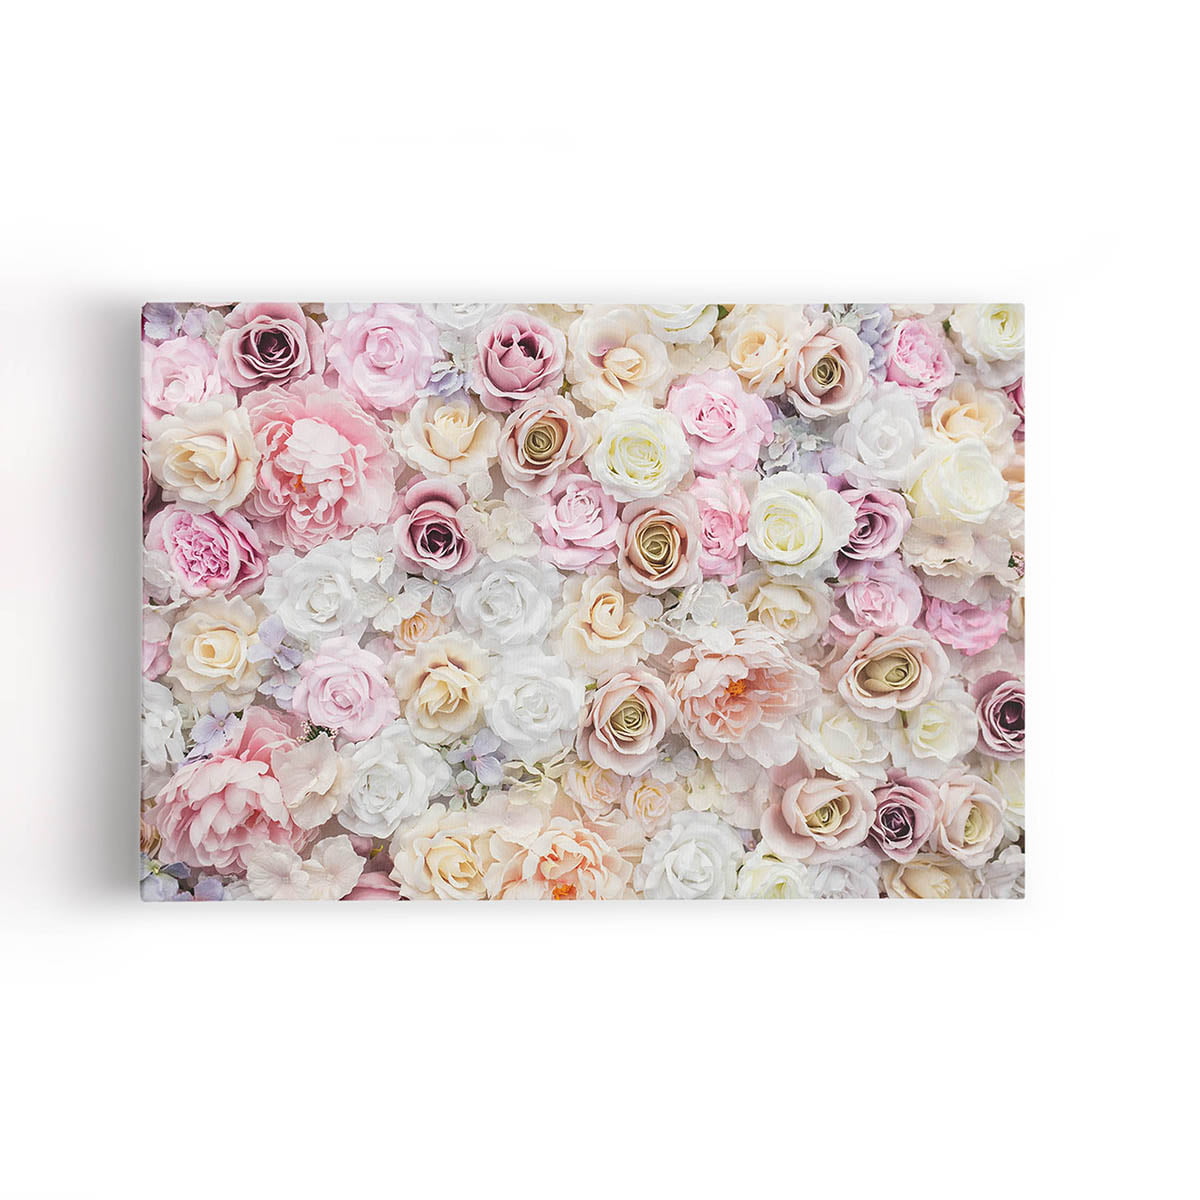 Quadro Mix de Flores e Rosas Coloridos Canvas